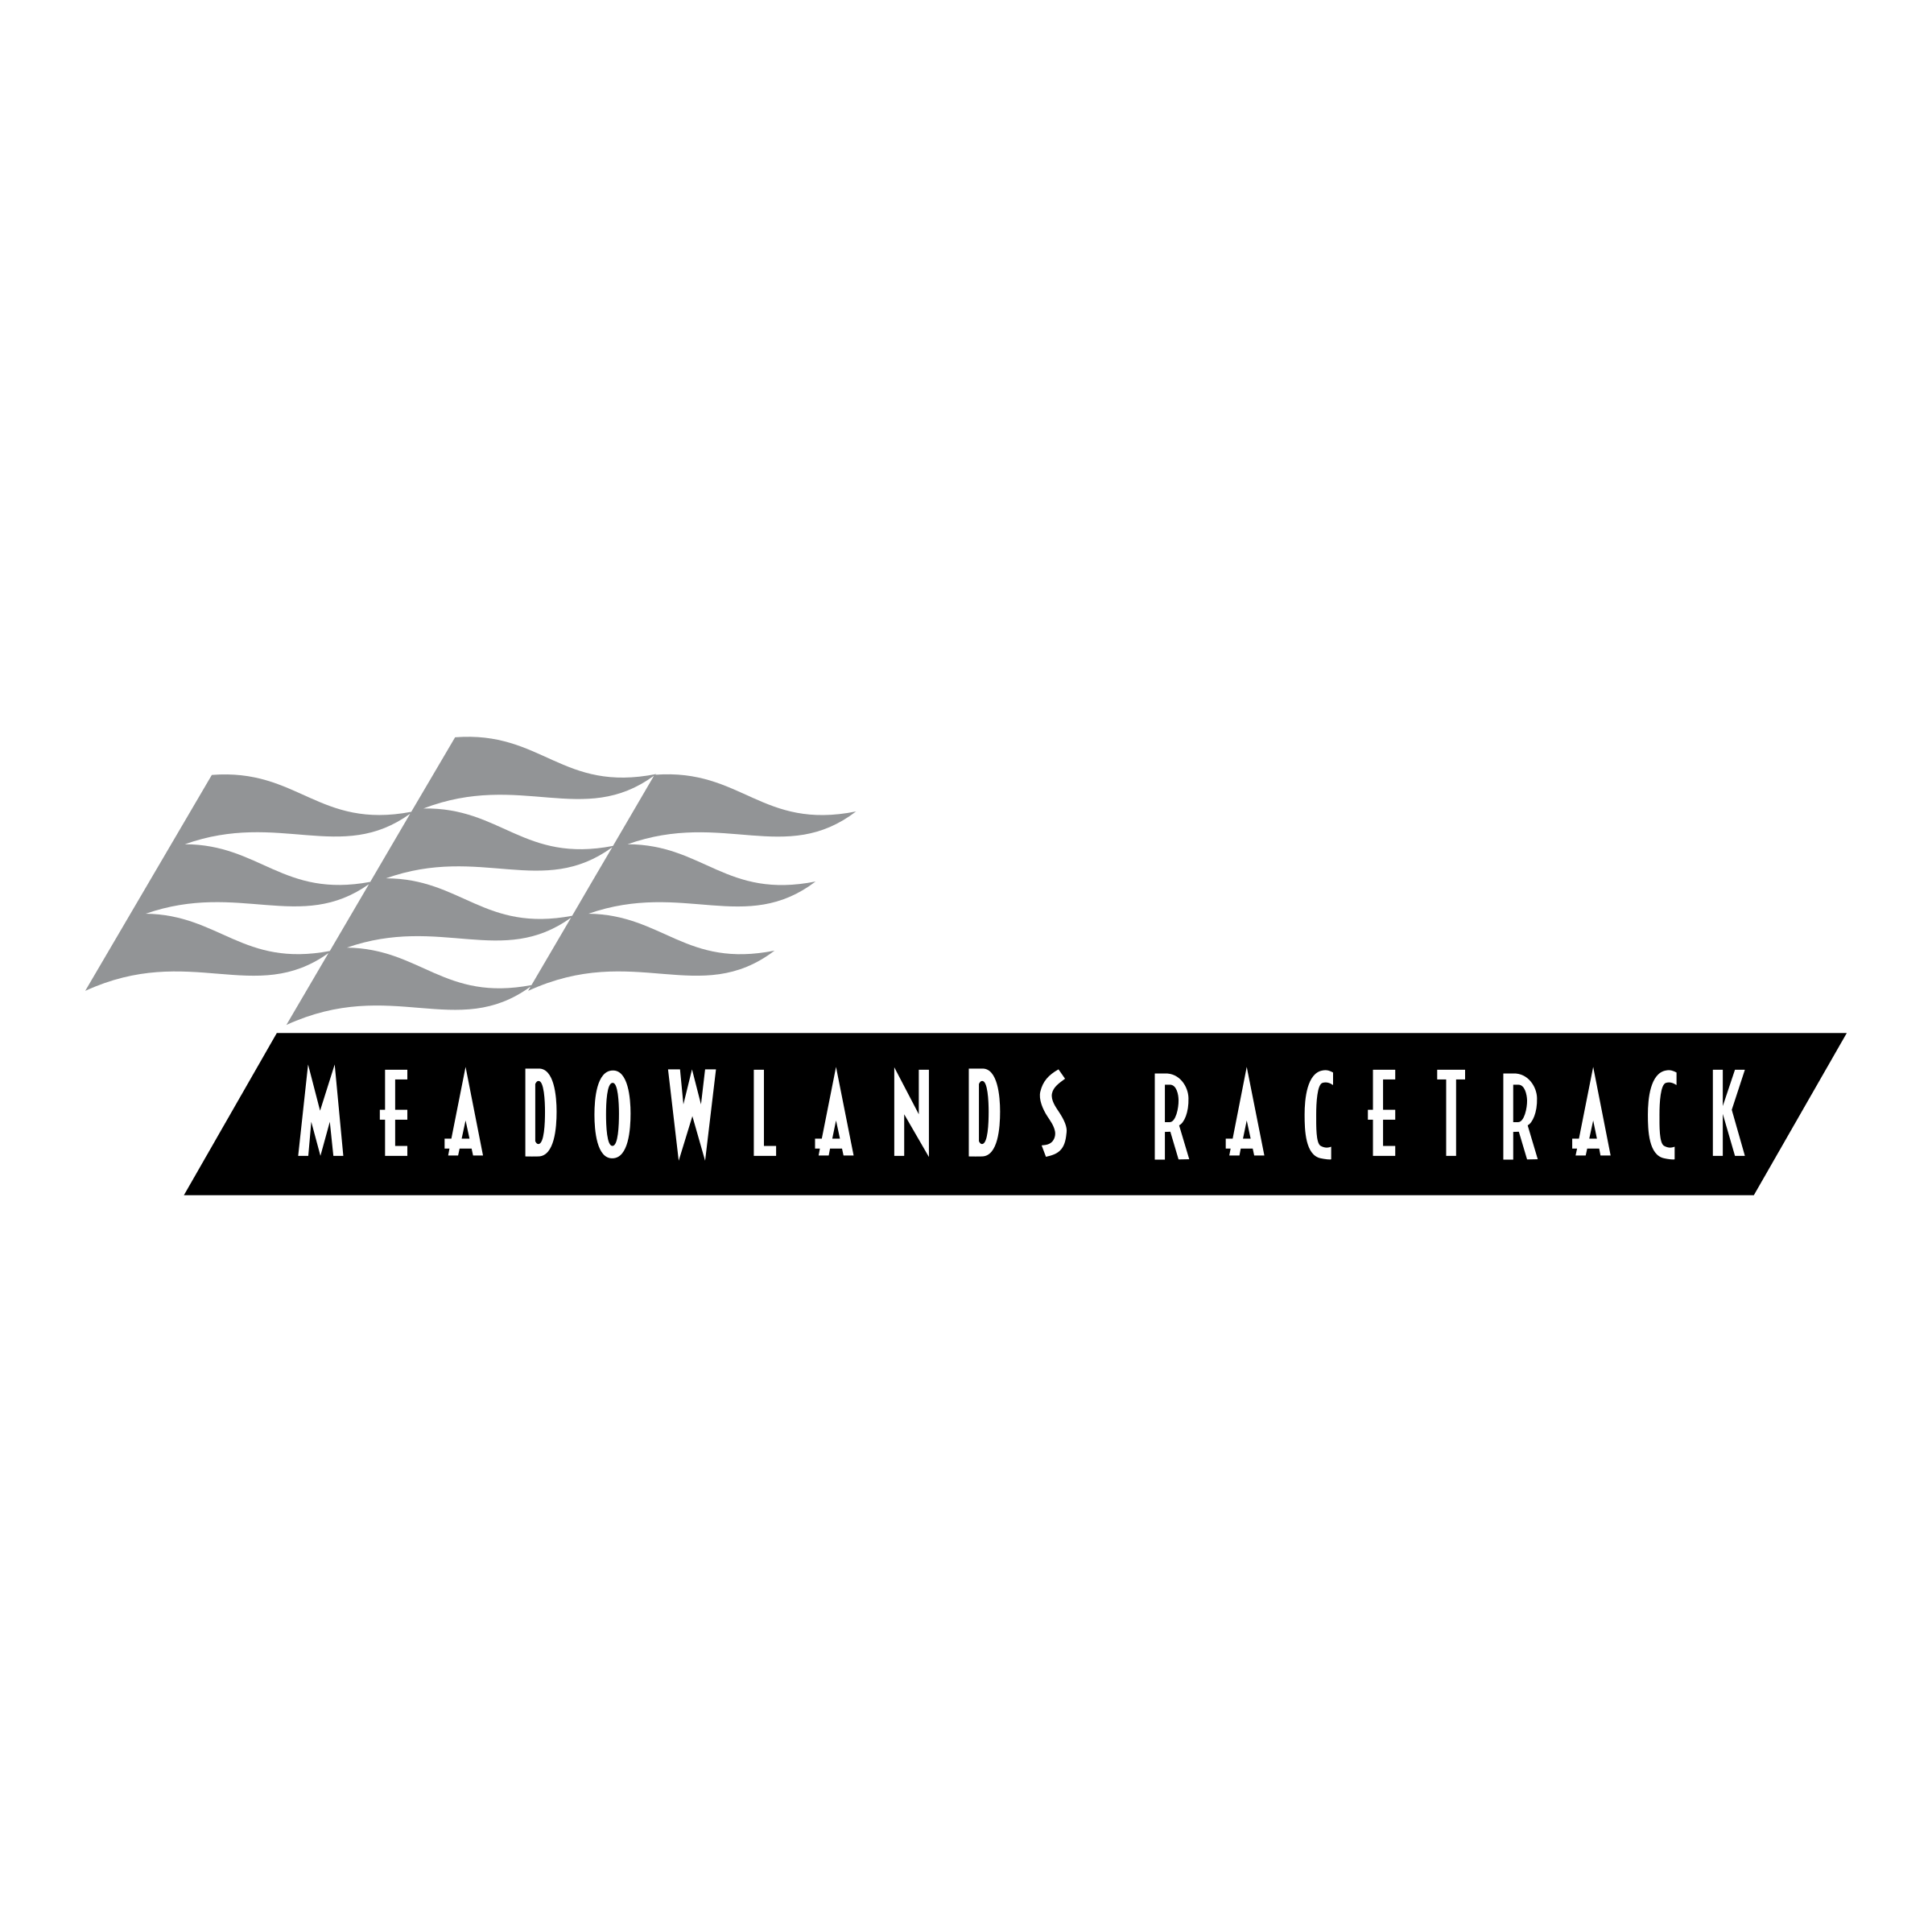 Racetrack Logo - Meadowlands Racetrack Logo PNG Transparent & SVG Vector - Freebie Supply